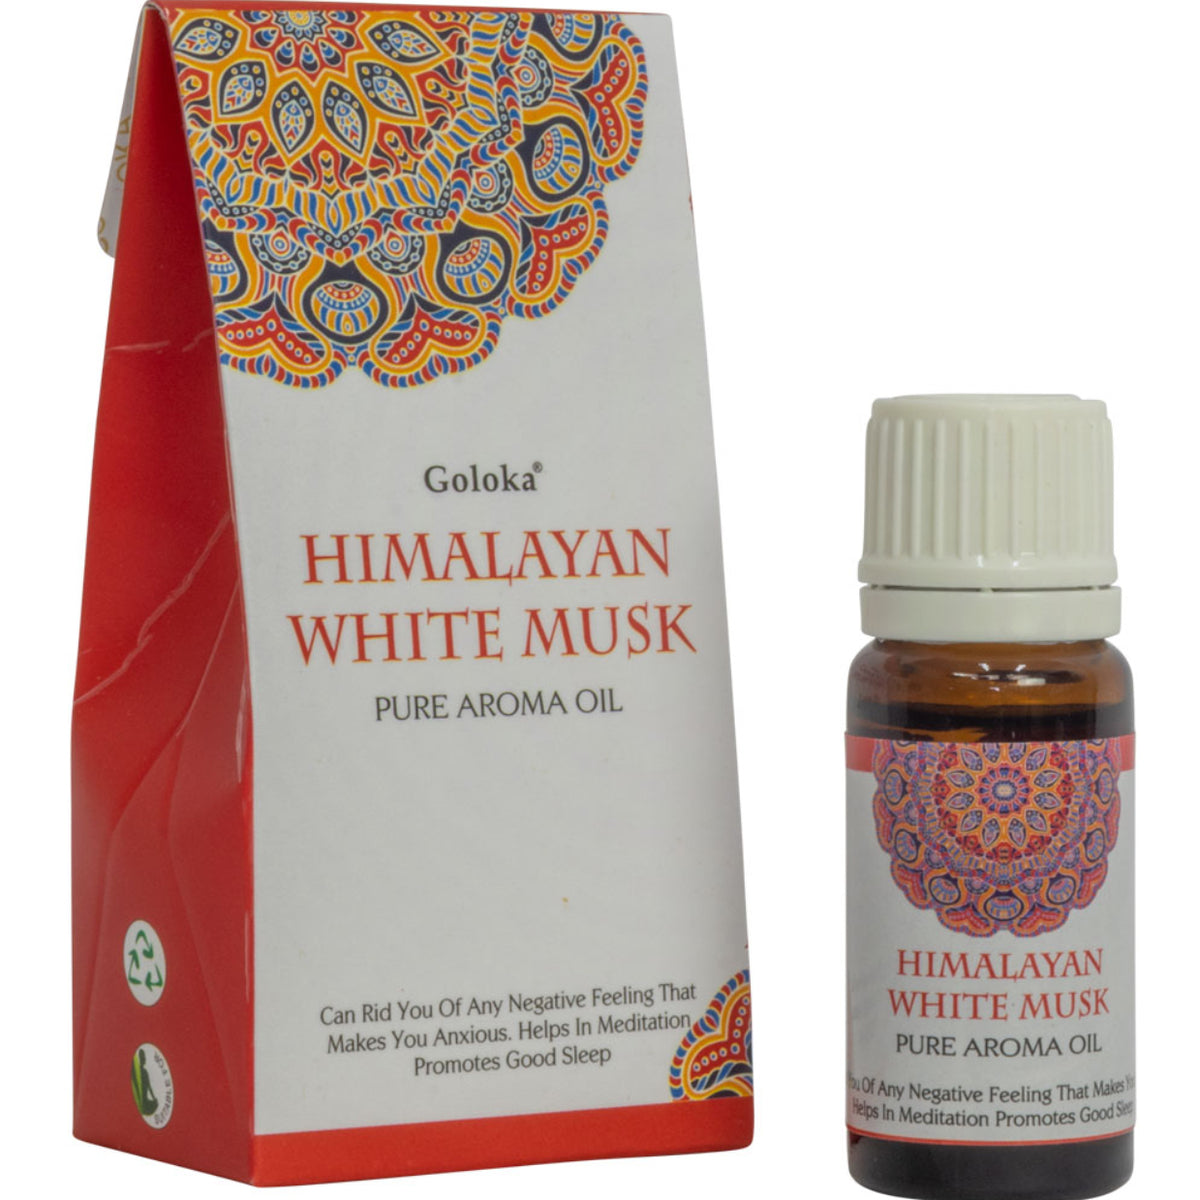 Himalayan White Musk Goloka Pure Aroma Oil 10ml